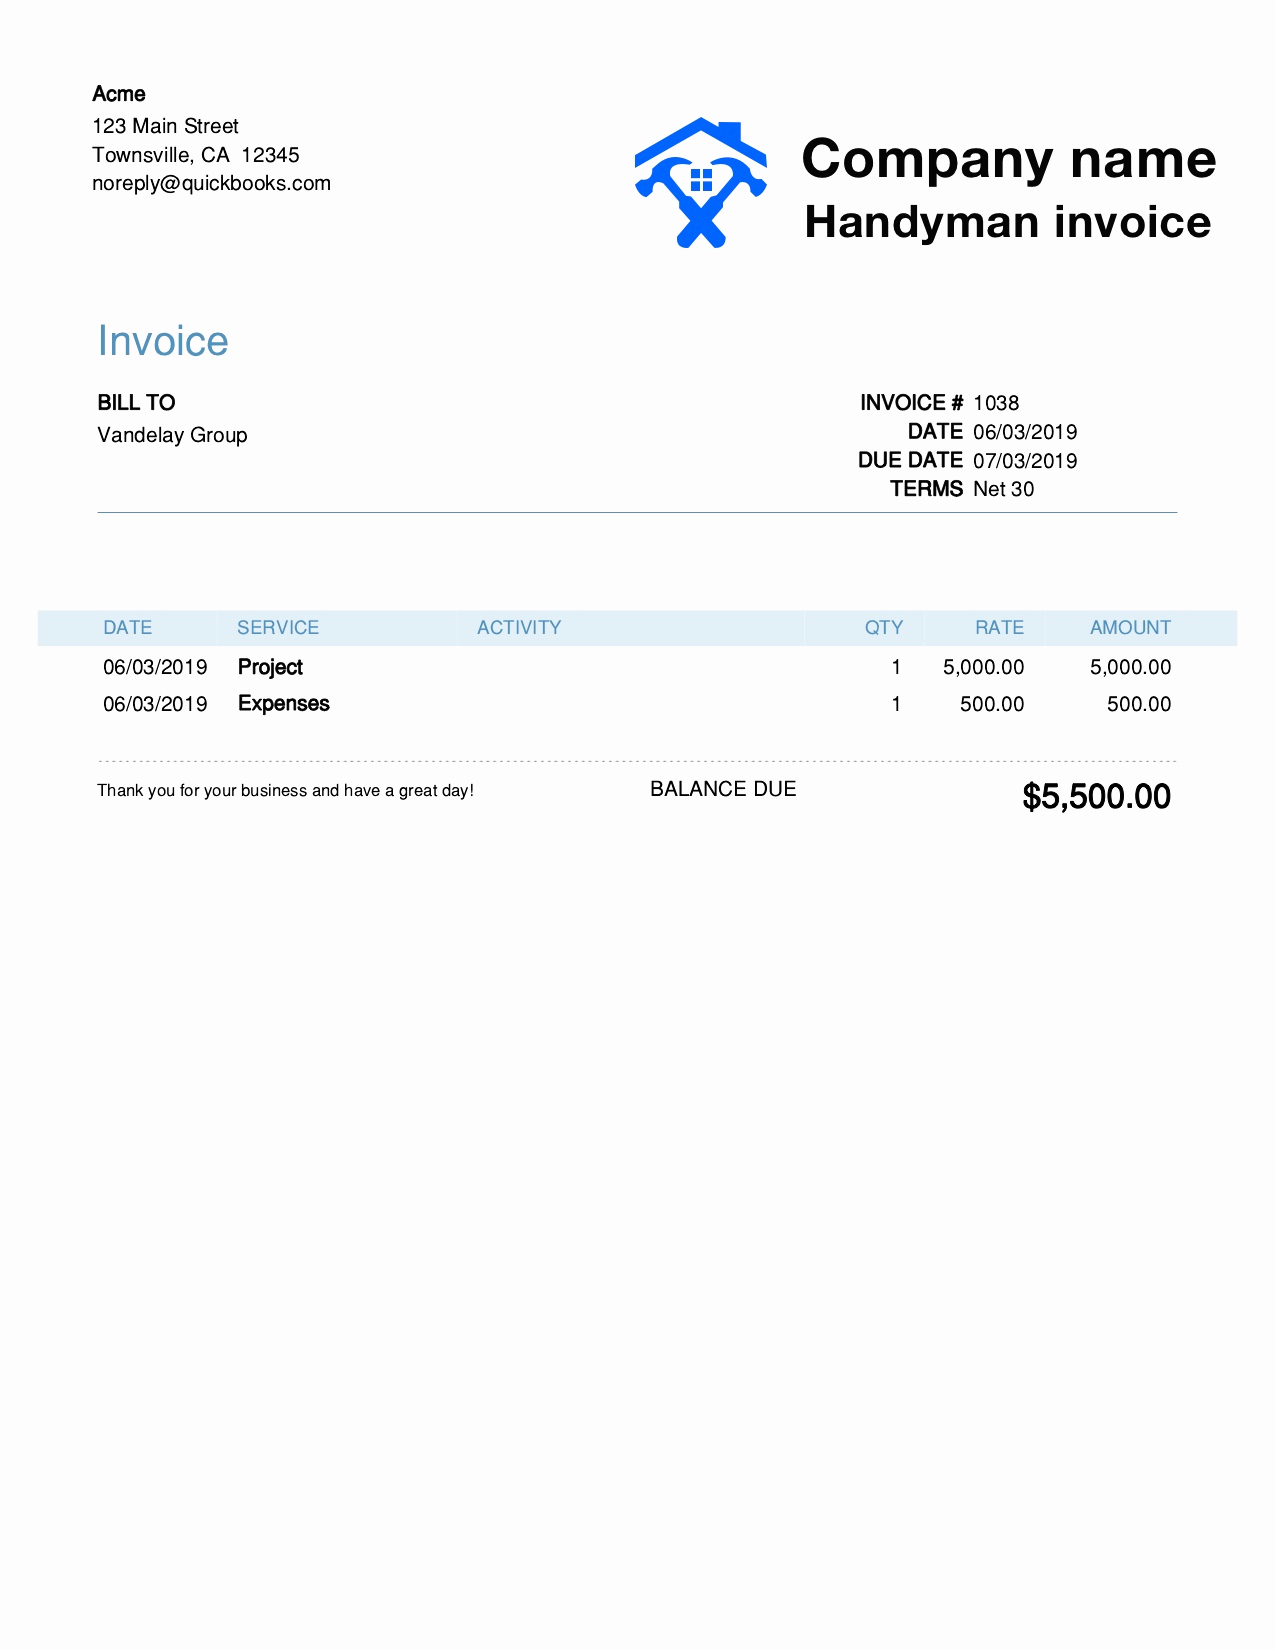 Free Handyman Invoice Template Inspirational Free Handyman Invoice Template Customize and Send In 90